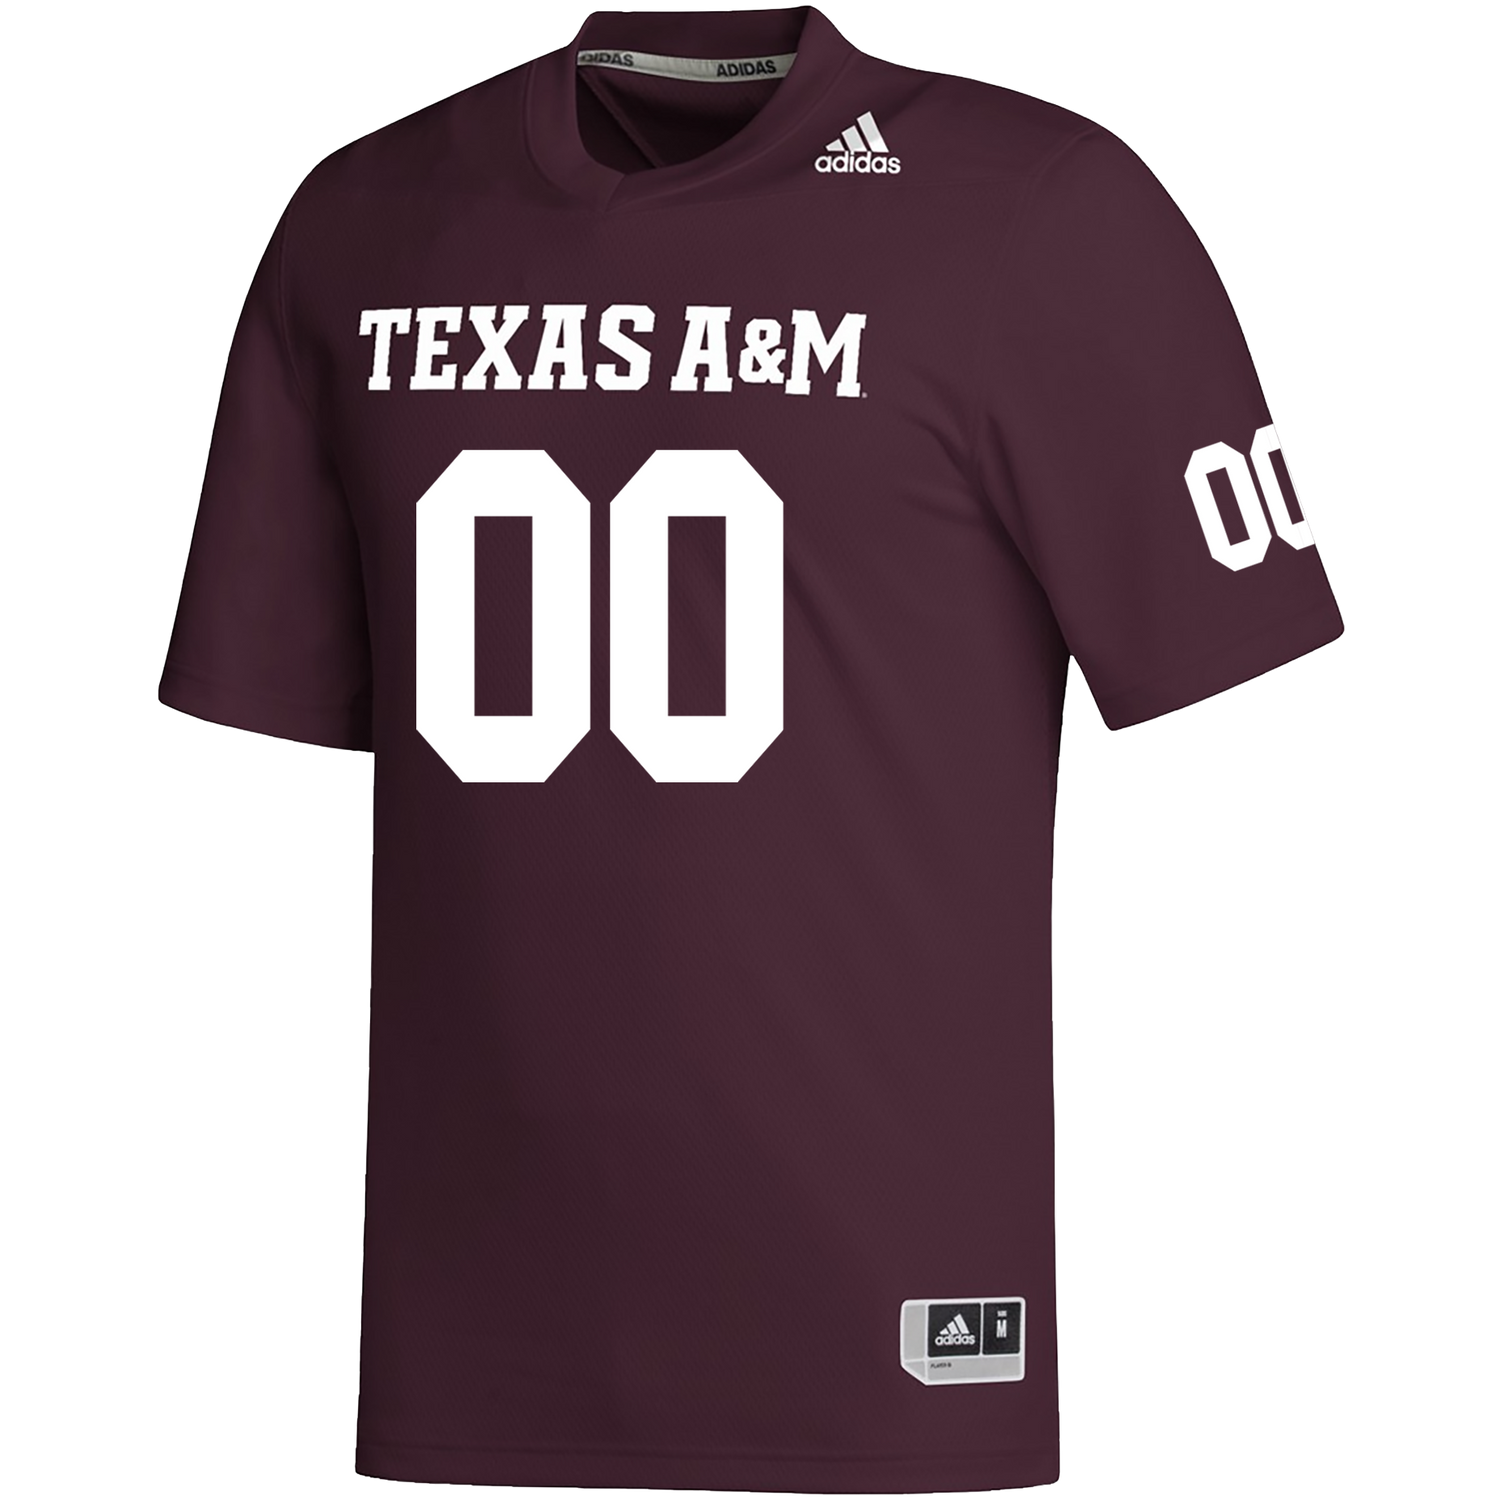 Texas A&M Adidas CUSTOM Football Jersey